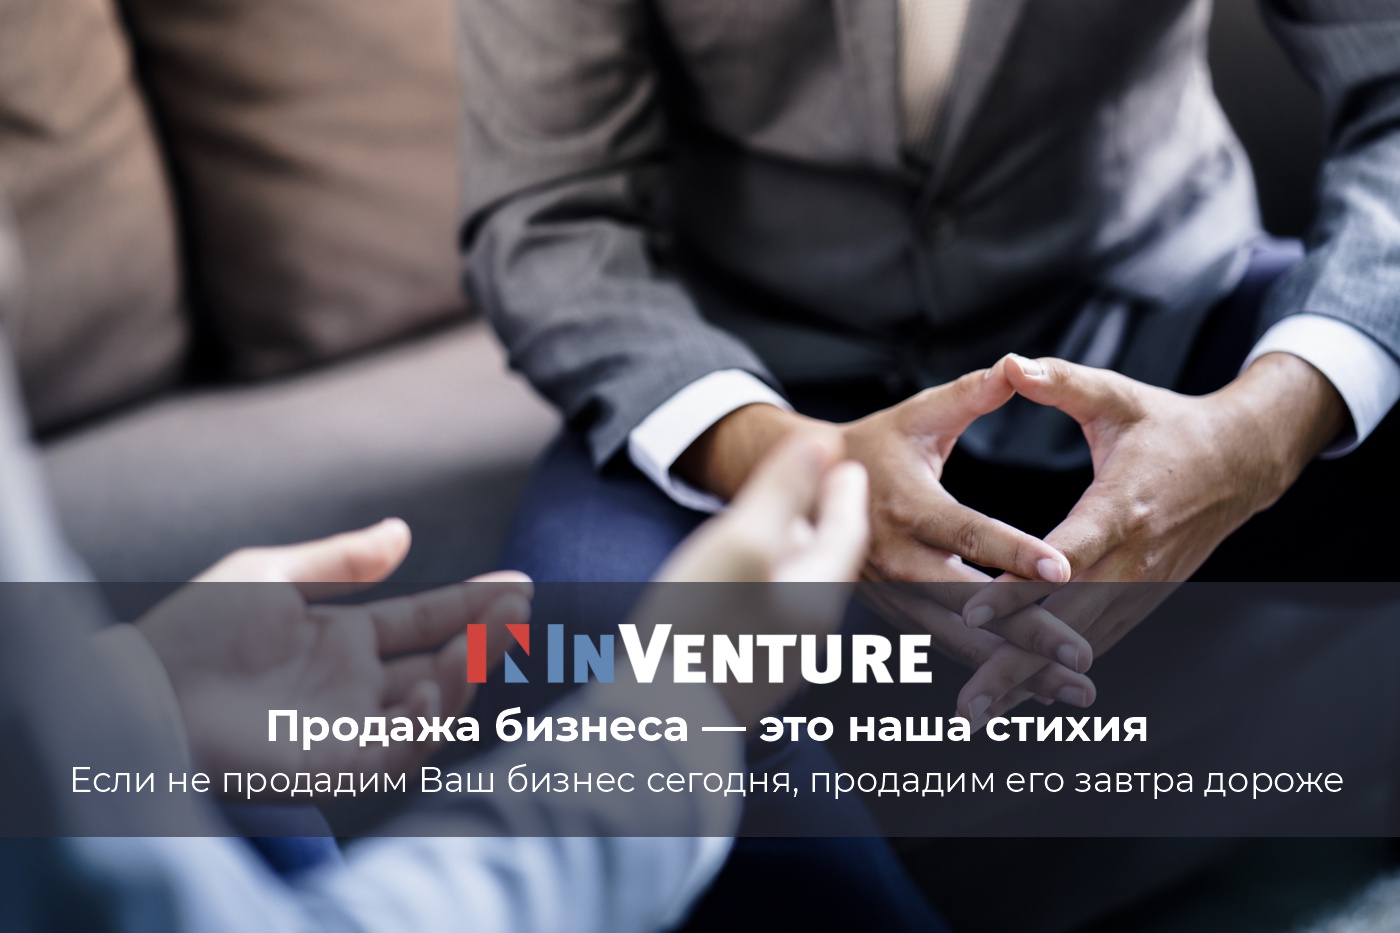 Продажа бизнеса в Украине - InVenture